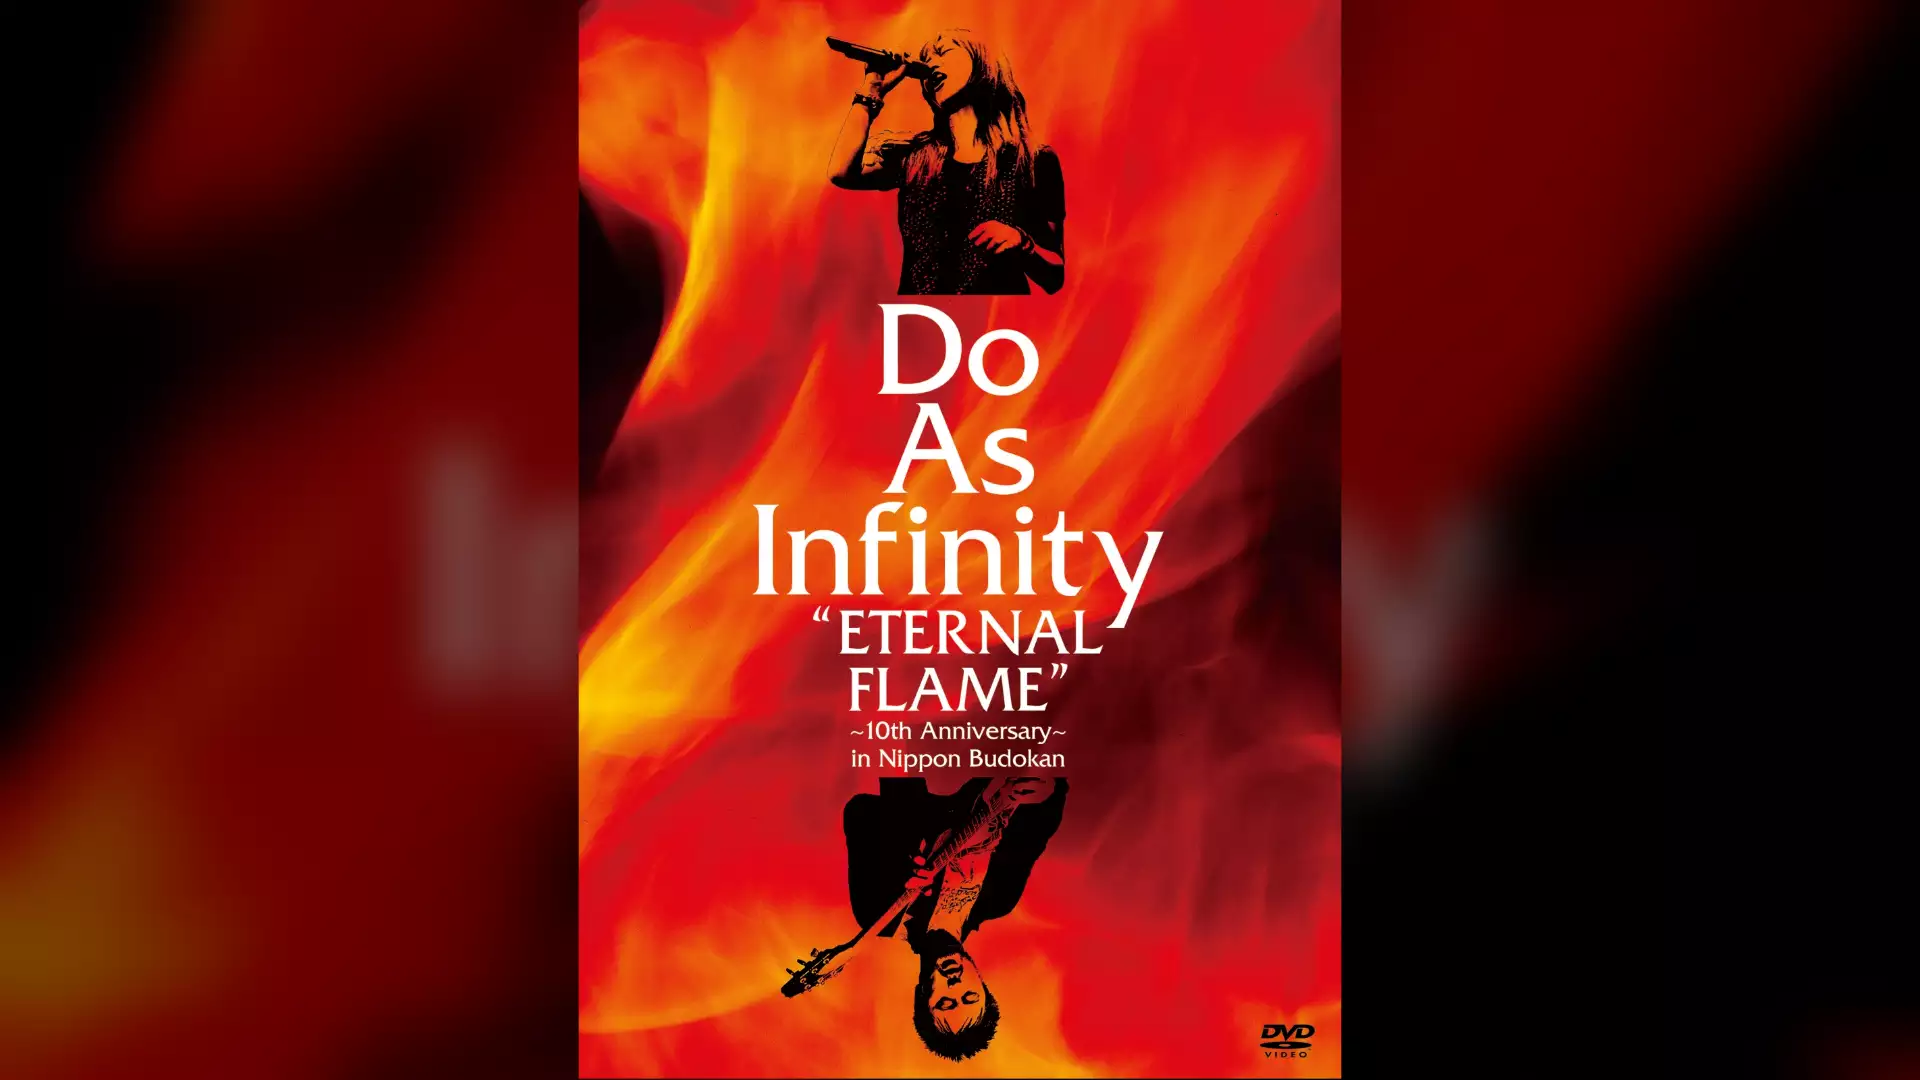 Do As Infinity “ETERNAL FLAME” 10th Anniversary in Nippon Budokan